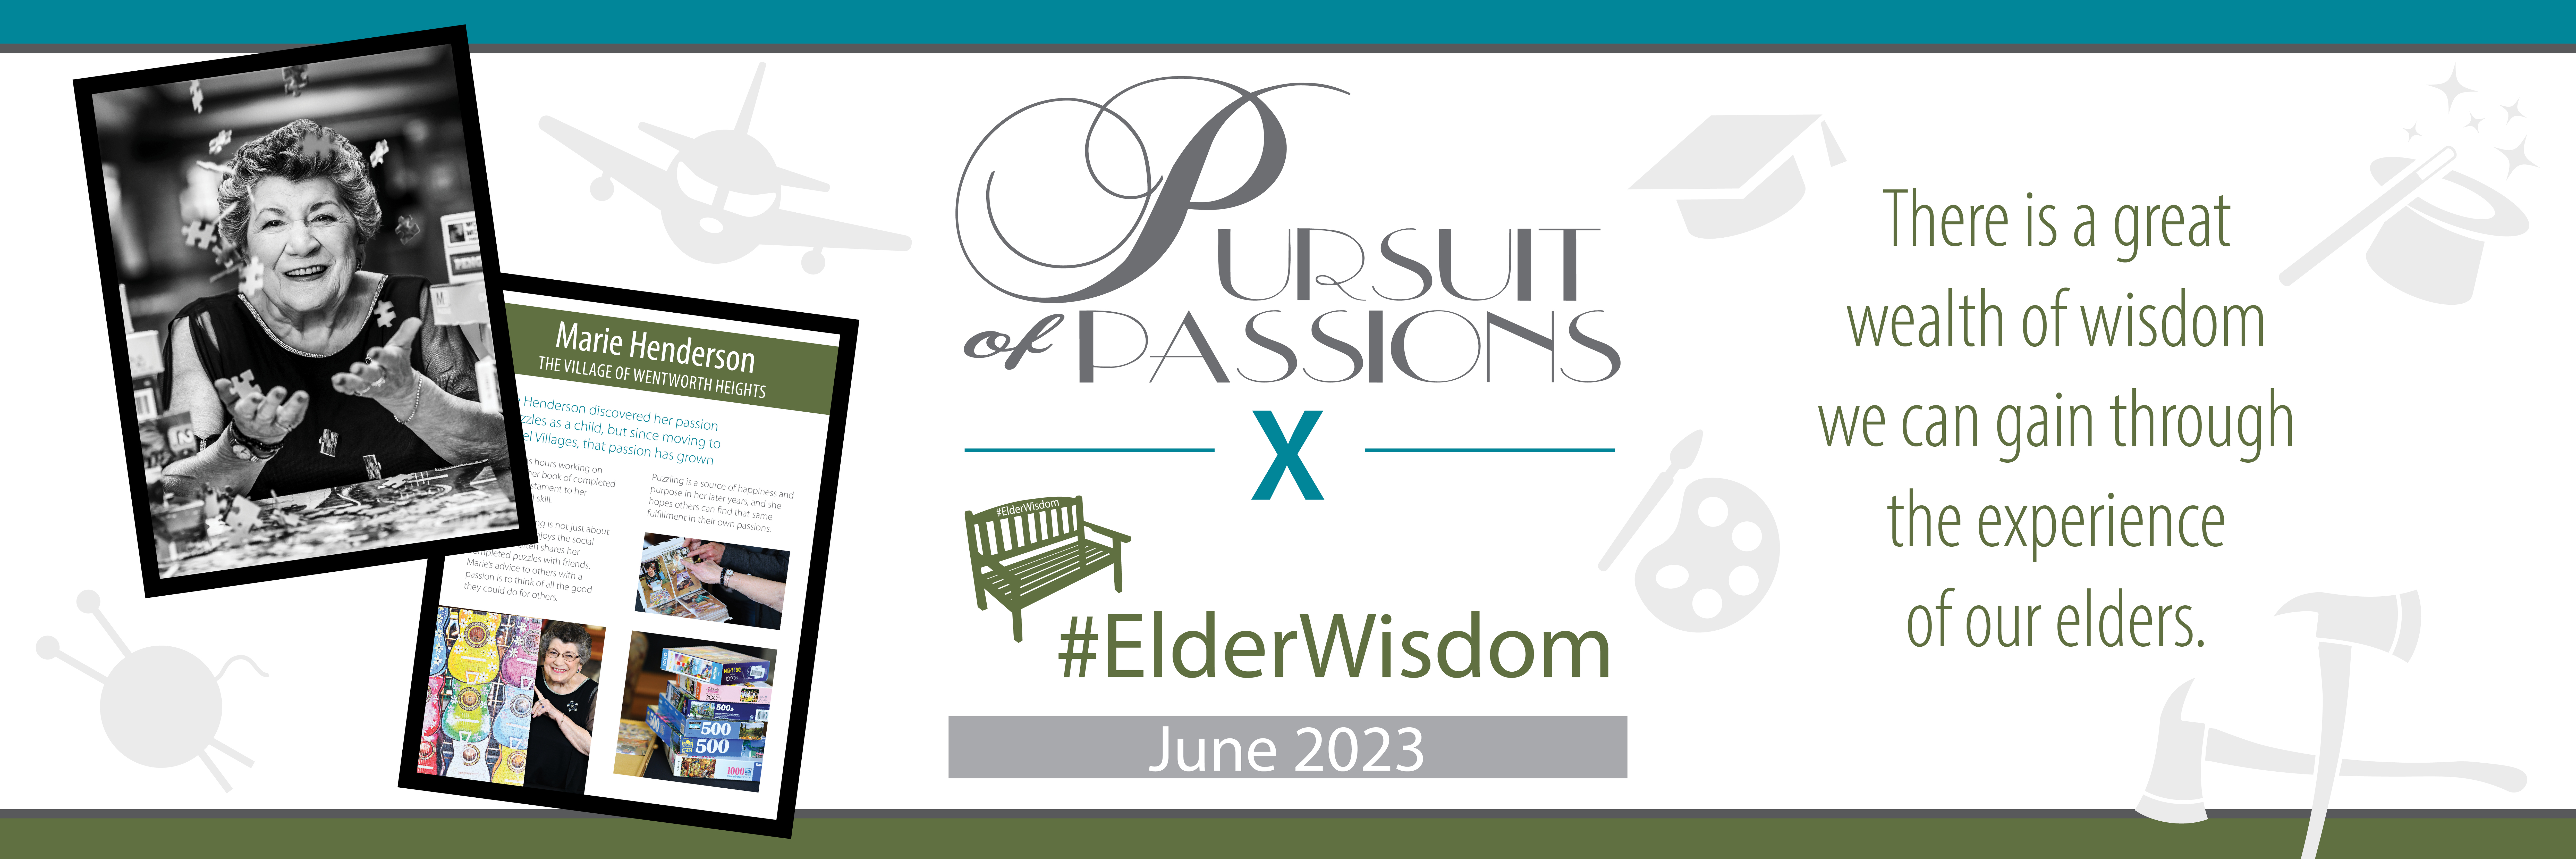 Pursuit of Passions x #ElderWisdom at Schlegel Villages